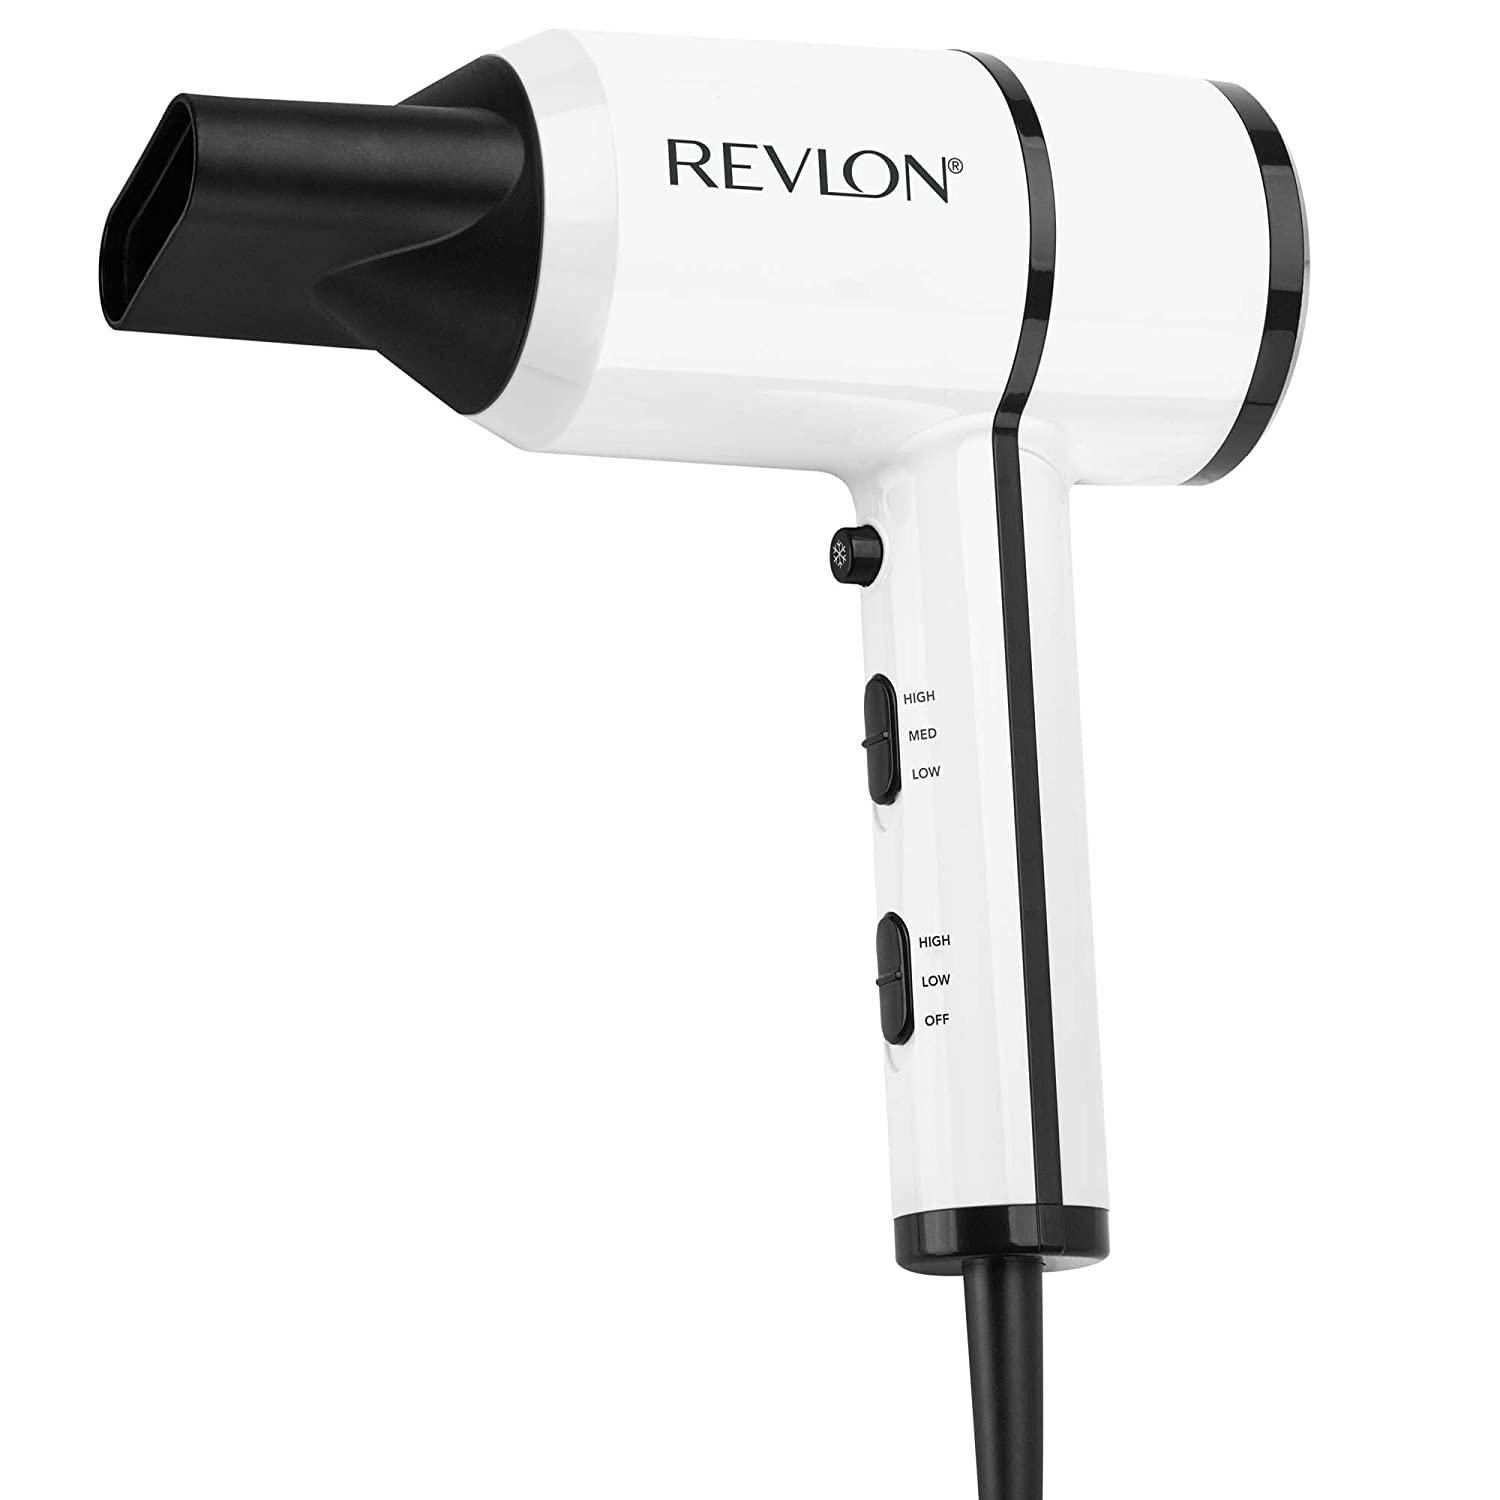 Revlon Crystal C + Ceramic Compact Hair Dryer for $13.98